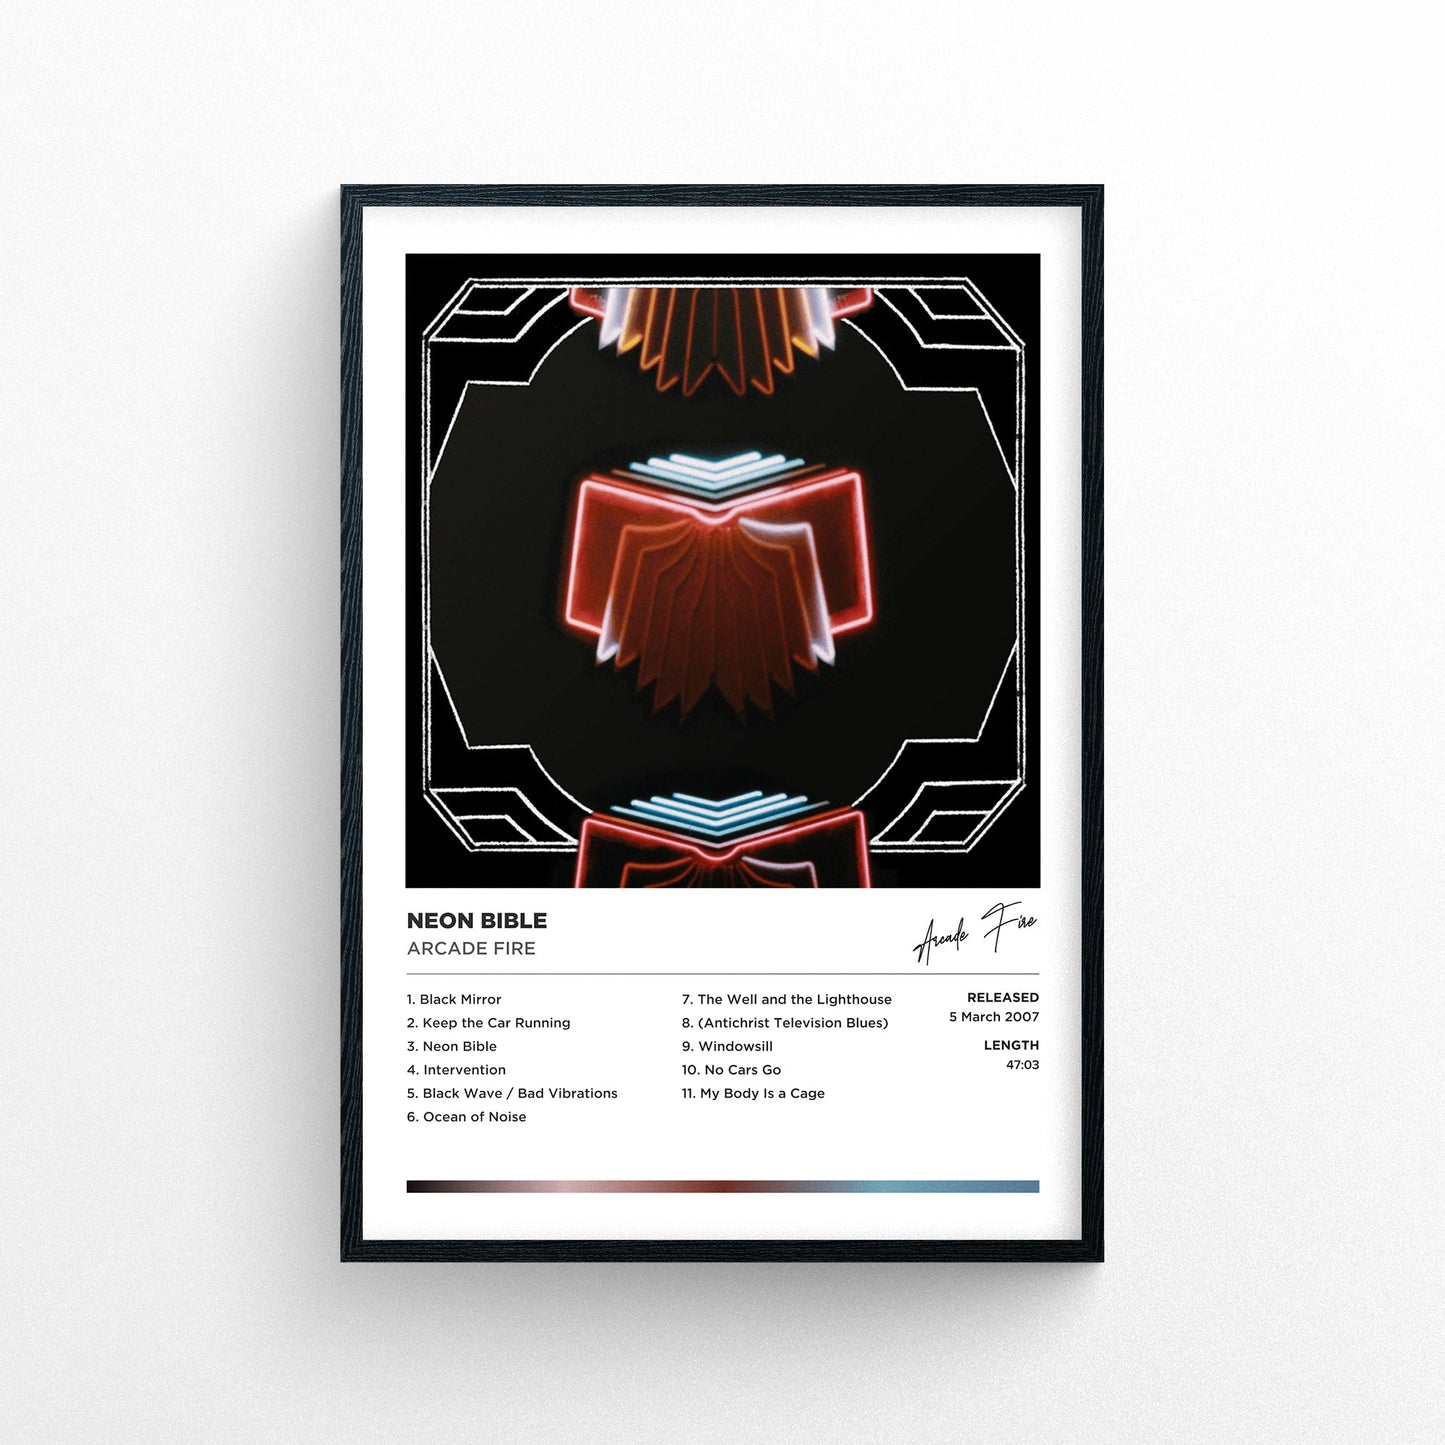 Arcade Fire - Neon Bible Framed Poster Print | Polaroid Style | Album Cover Artwork